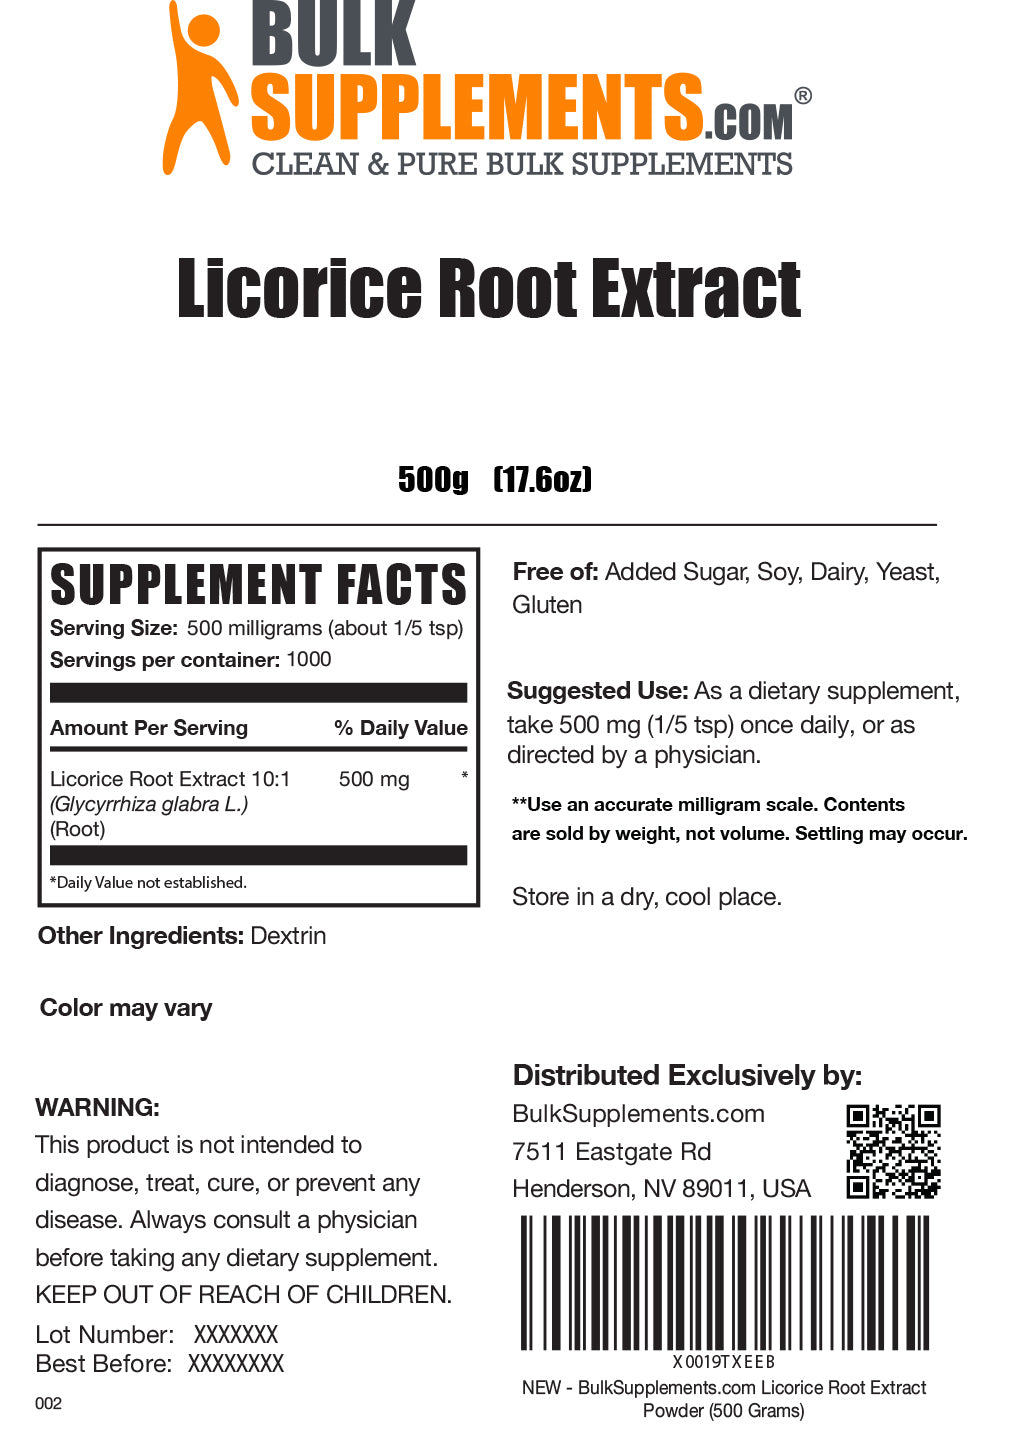 Licorice Root Extract Label 500g